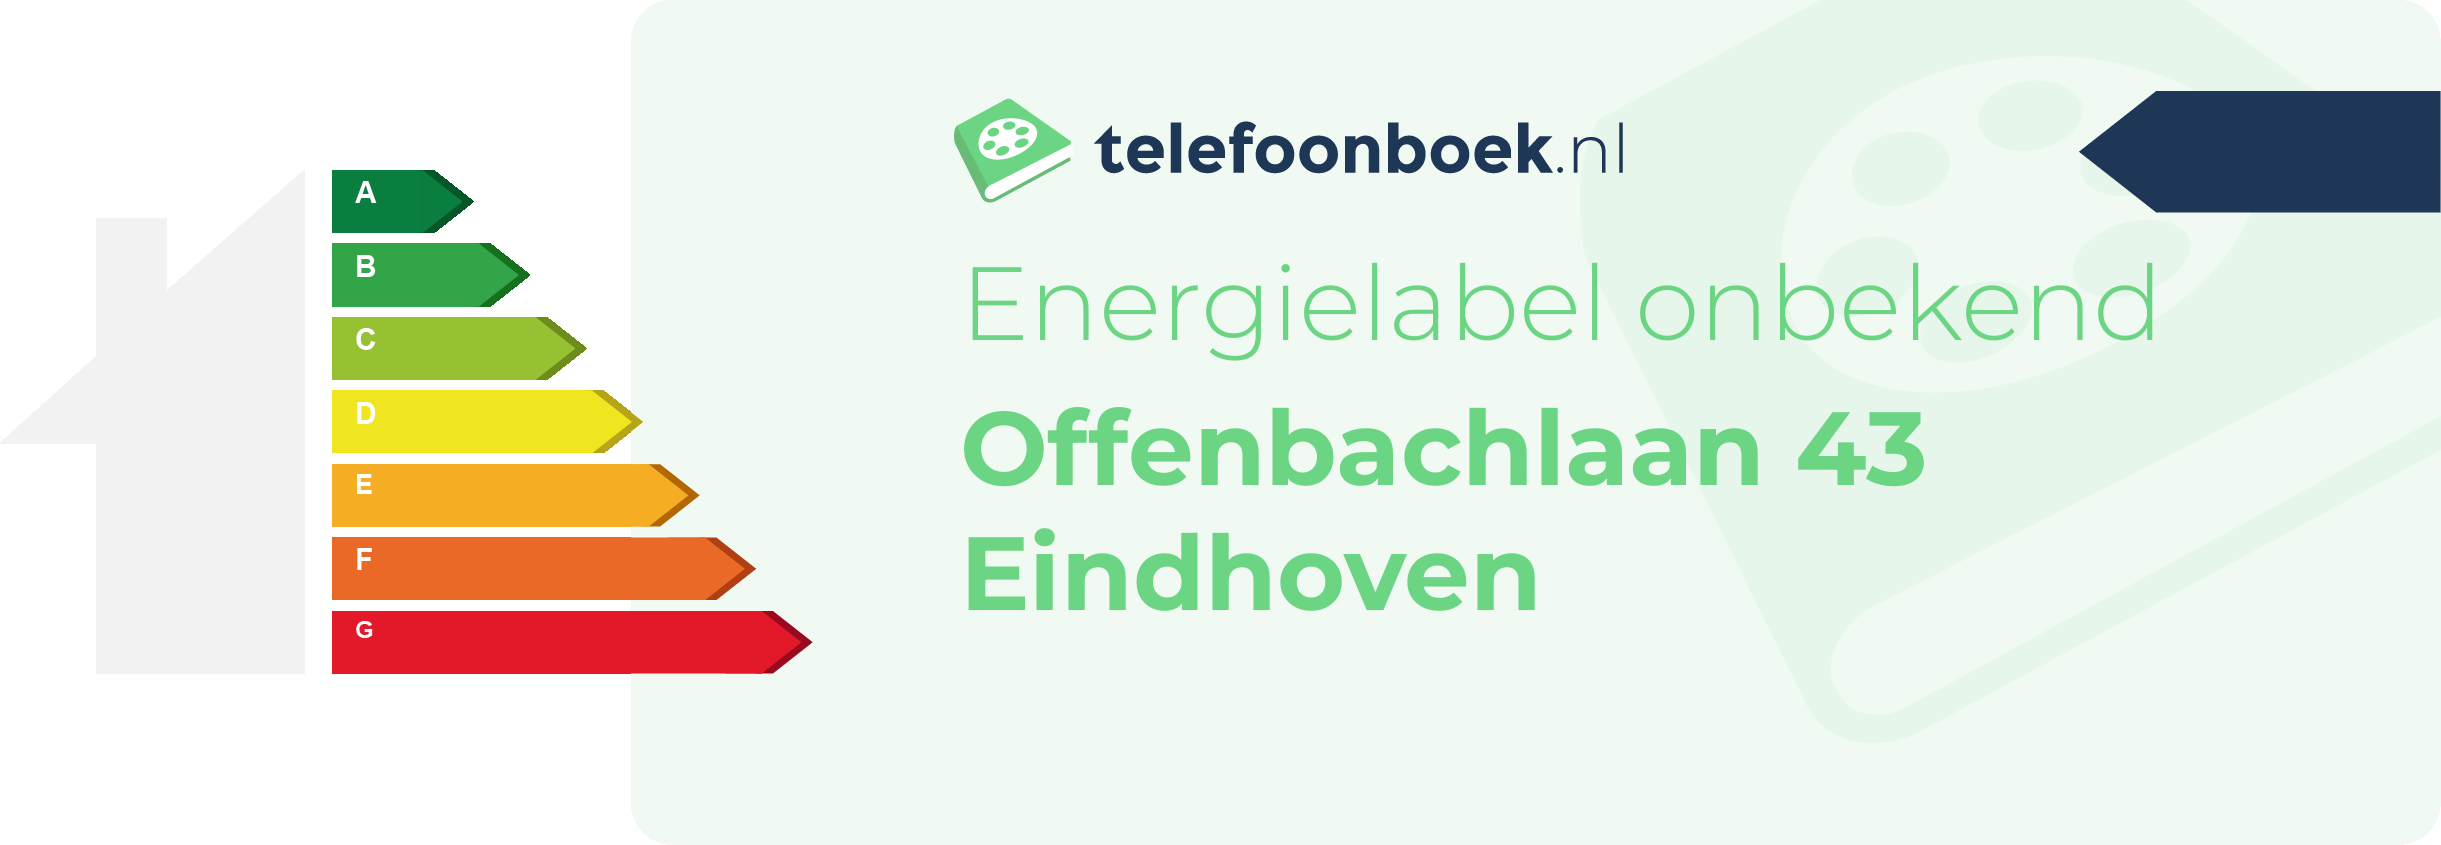 Energielabel Offenbachlaan 43 Eindhoven